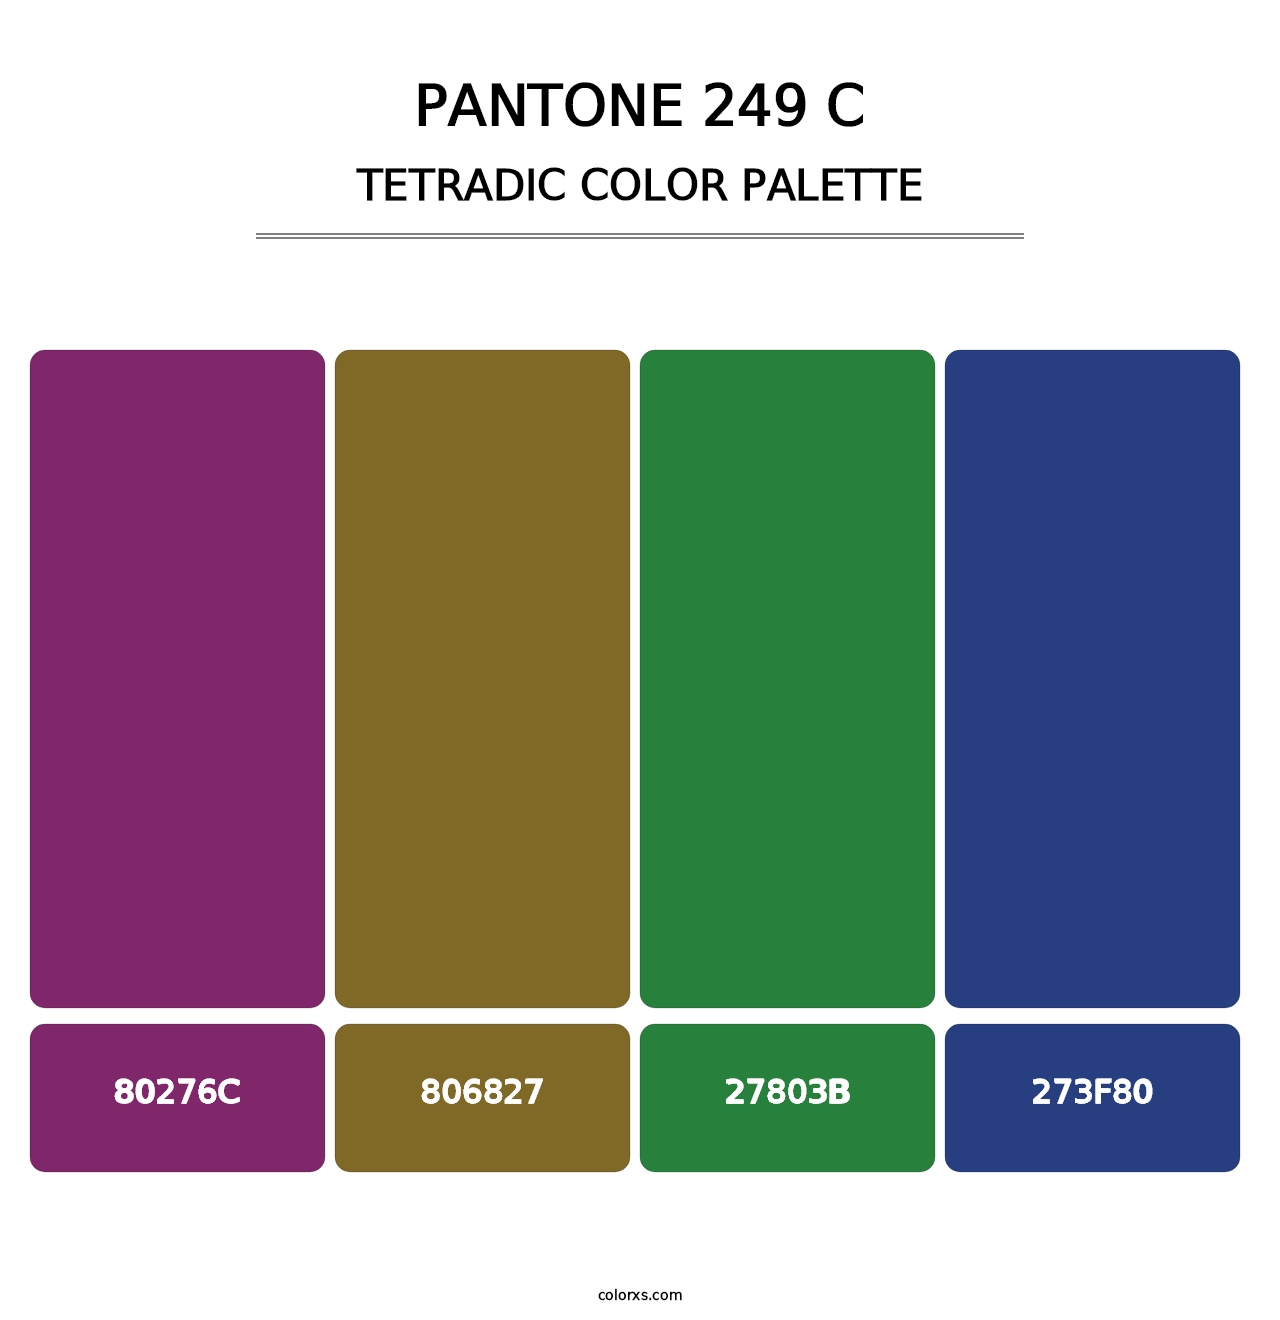 PANTONE 249 C - Tetradic Color Palette